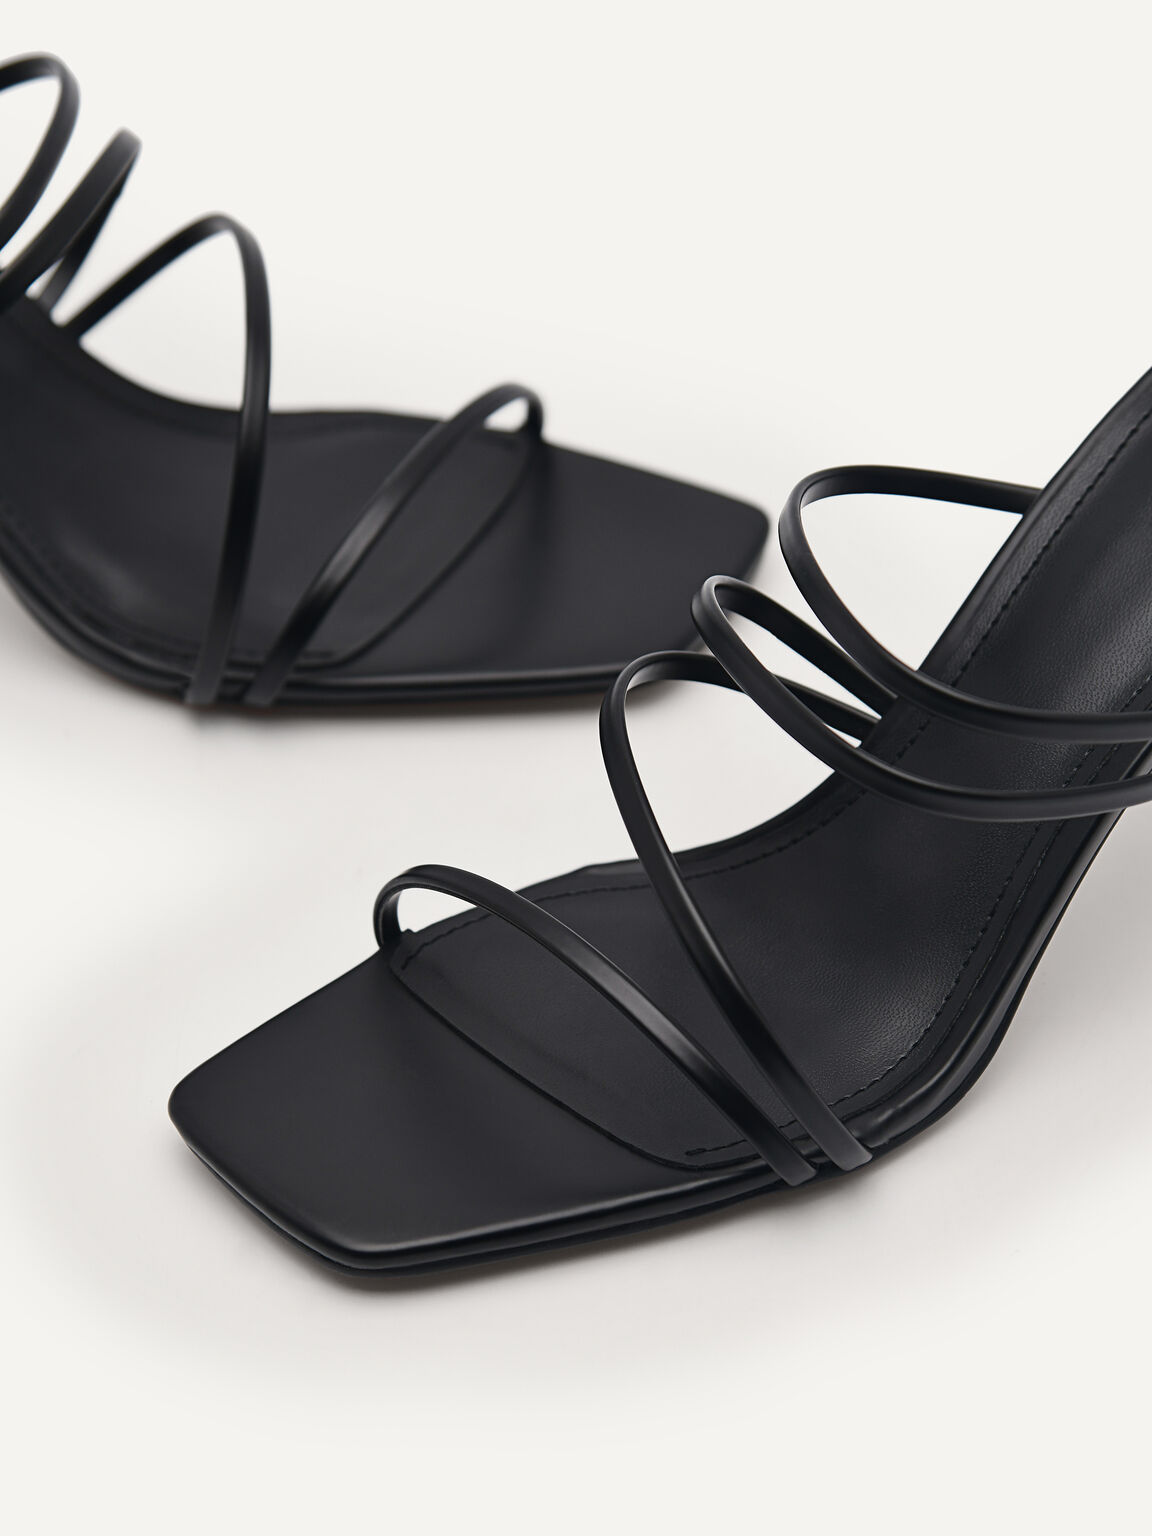 Strappy Heeled Sandals, Black